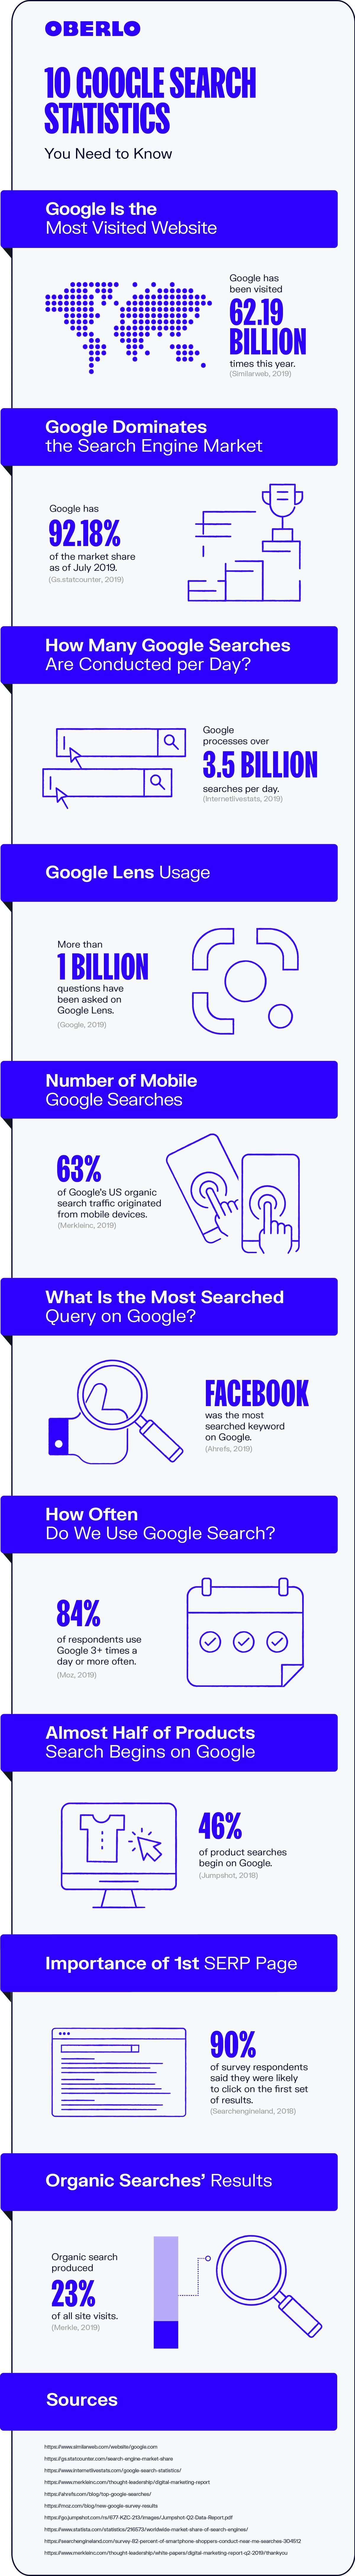 Google Search Statistics 2020